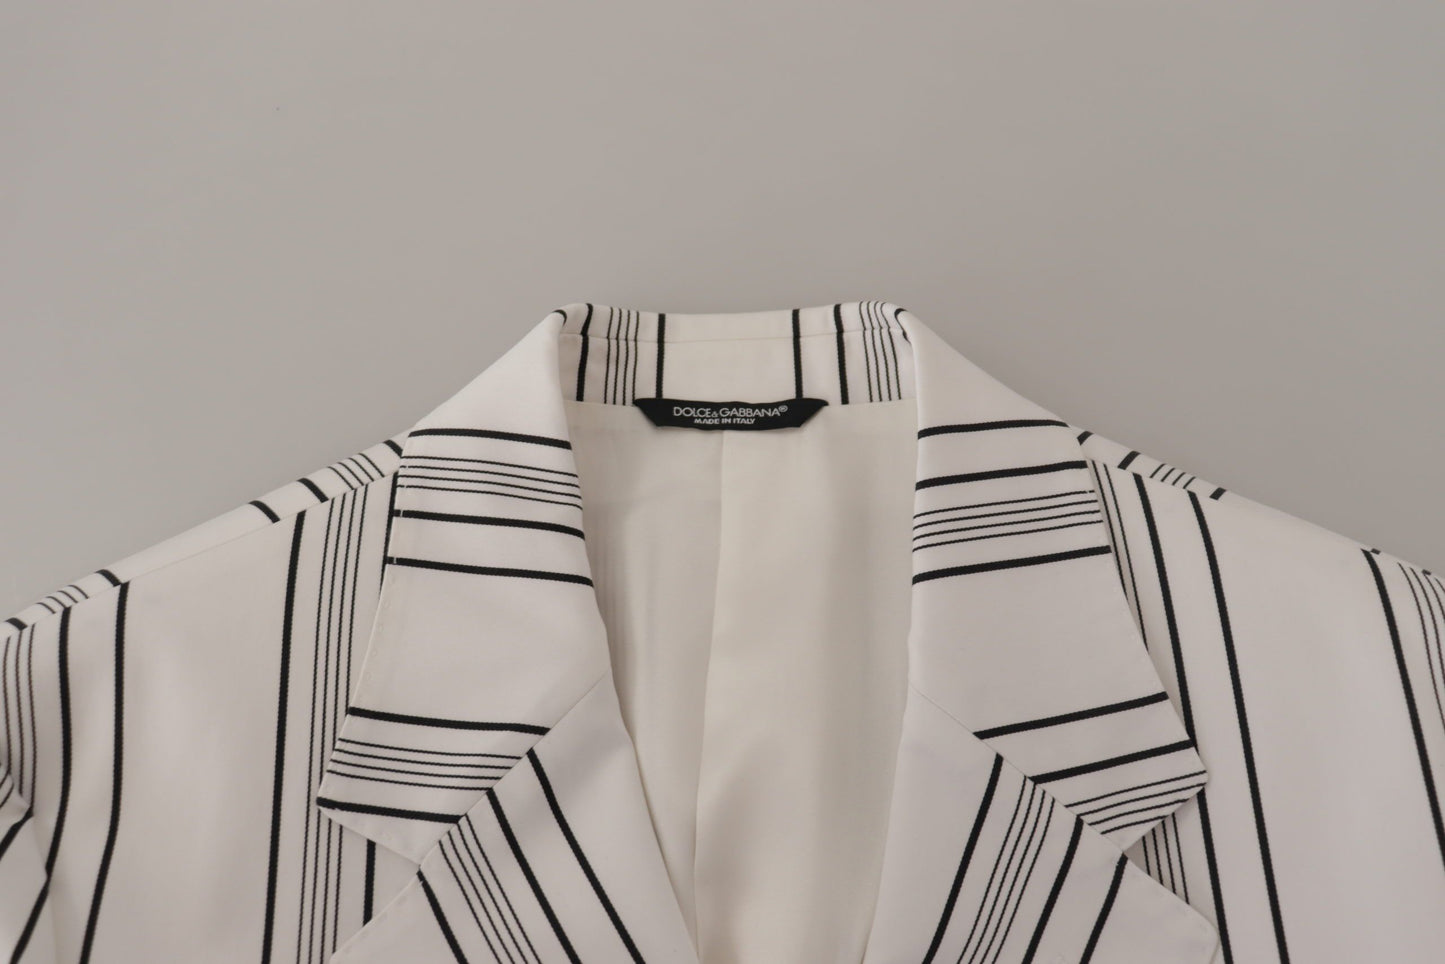 Elegant Striped Cotton Blend Blazer